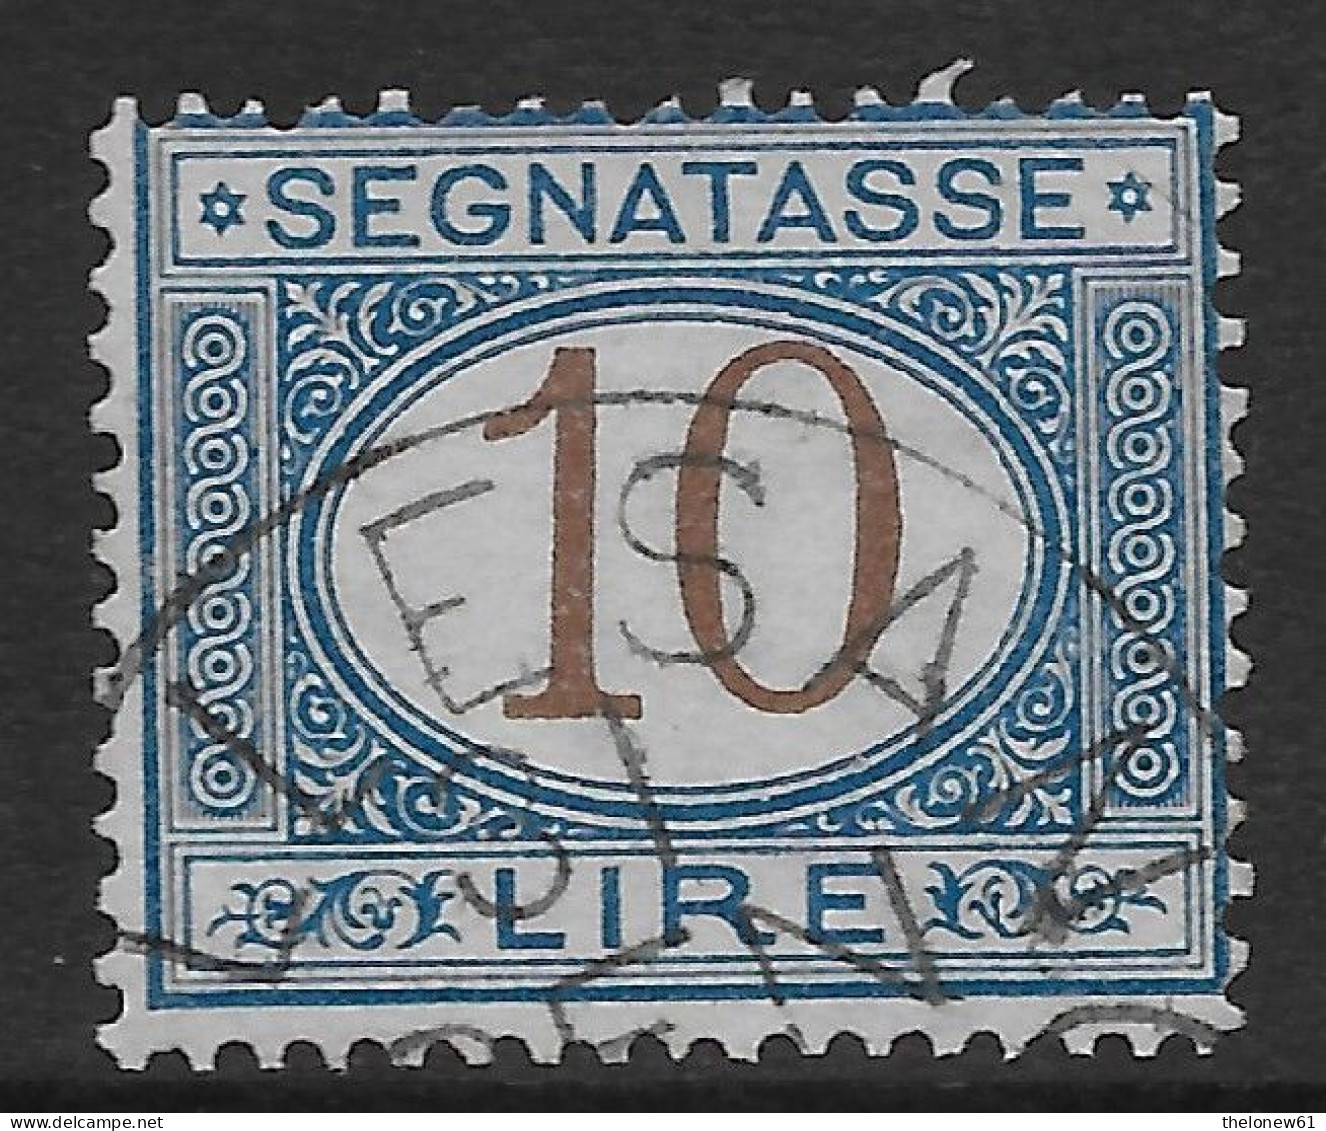 Italia Italy 1870 Regno Segnatasse L10 Sa N.S14 US - Postage Due